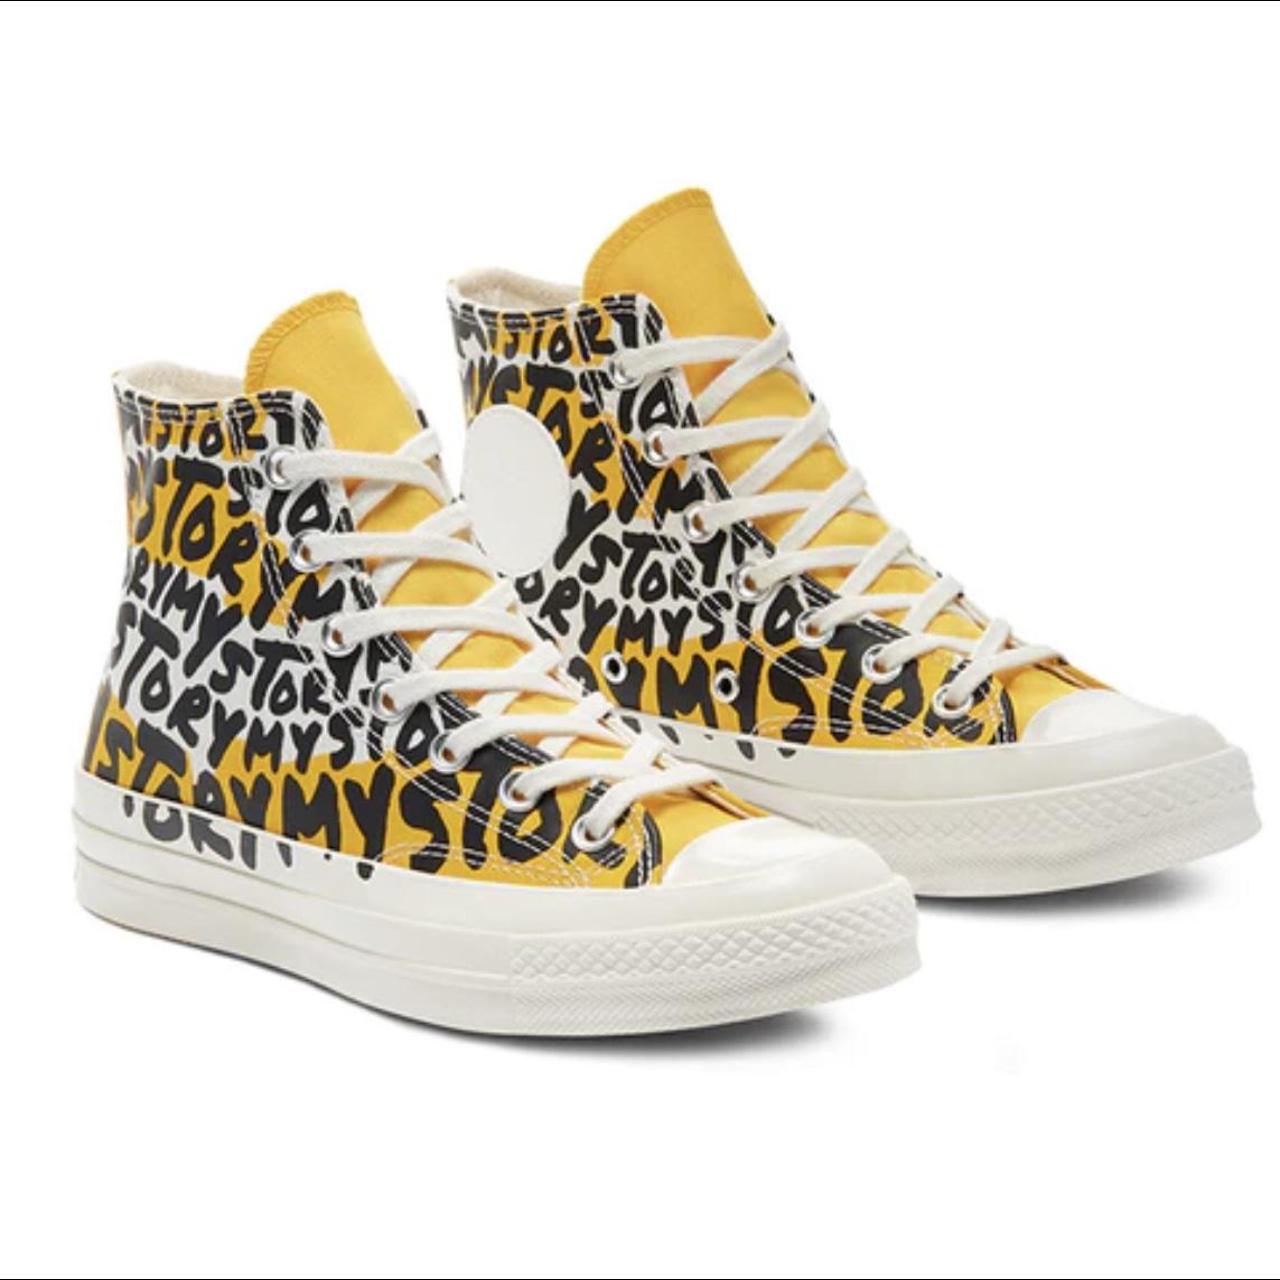 Verliefd Wonen pedaal Graffiti converse sneakers in yellow and... - Depop